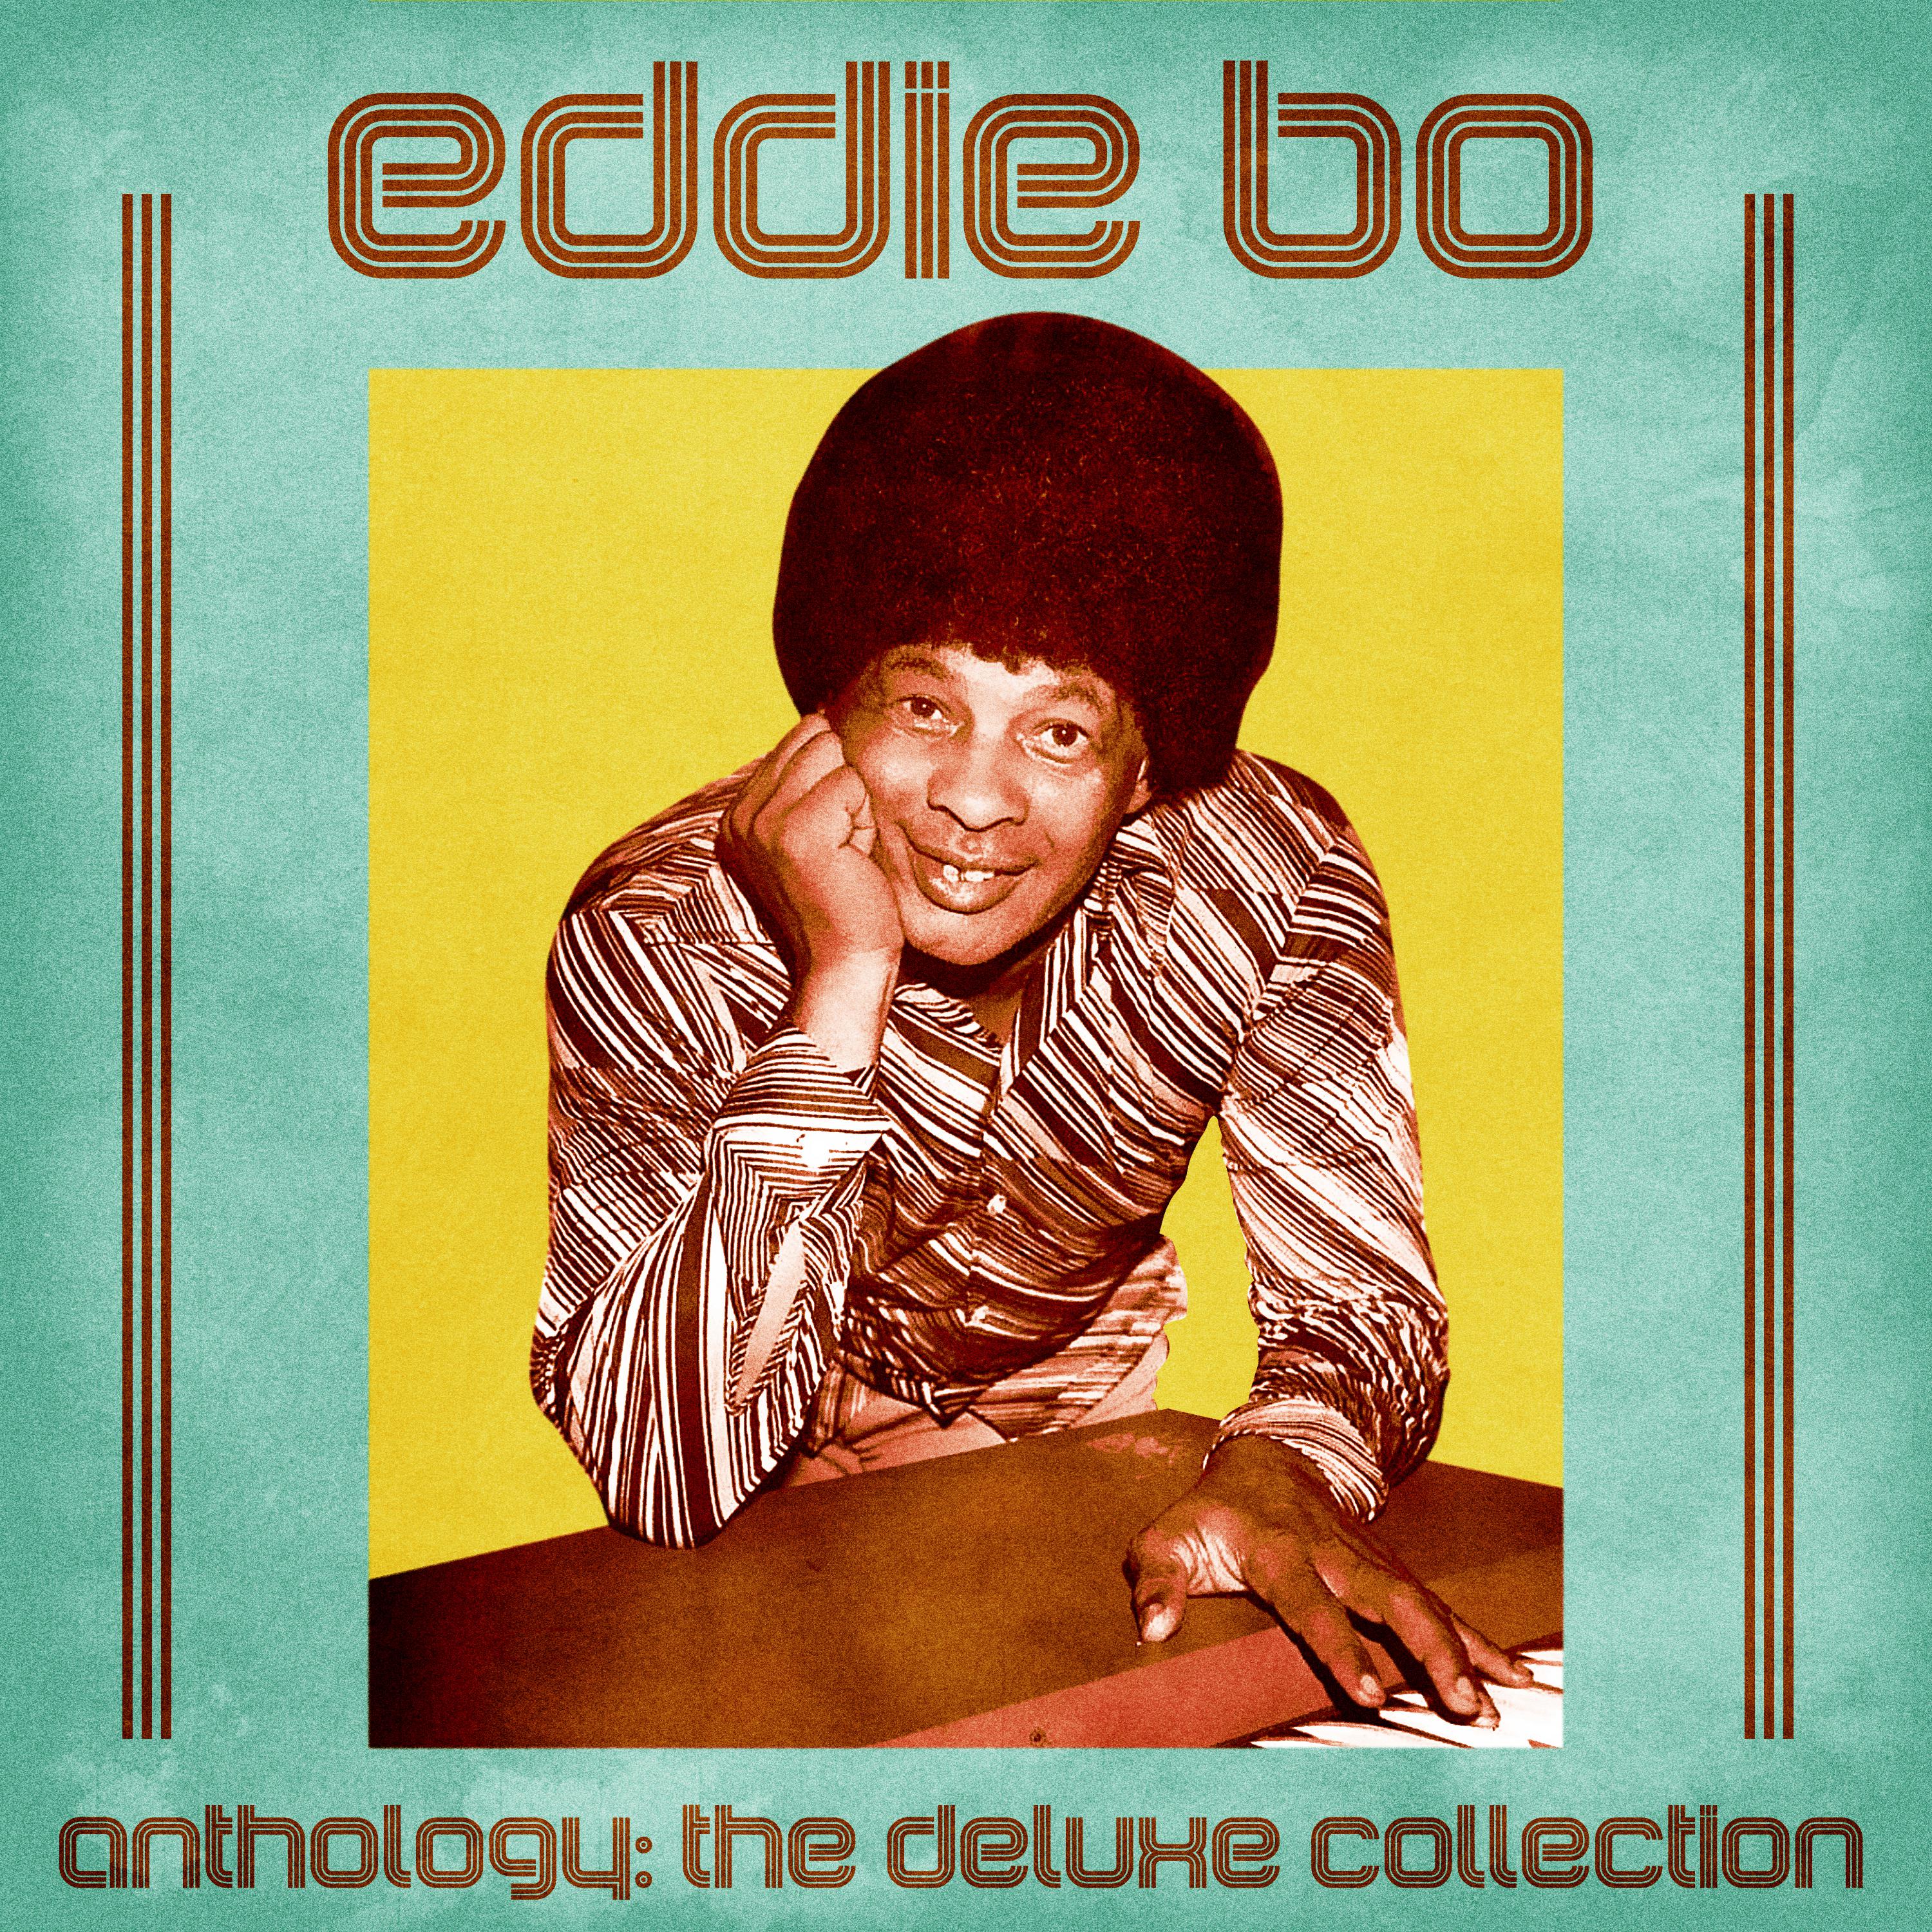 Eddie Bo - Warm Daddy (Remastered)